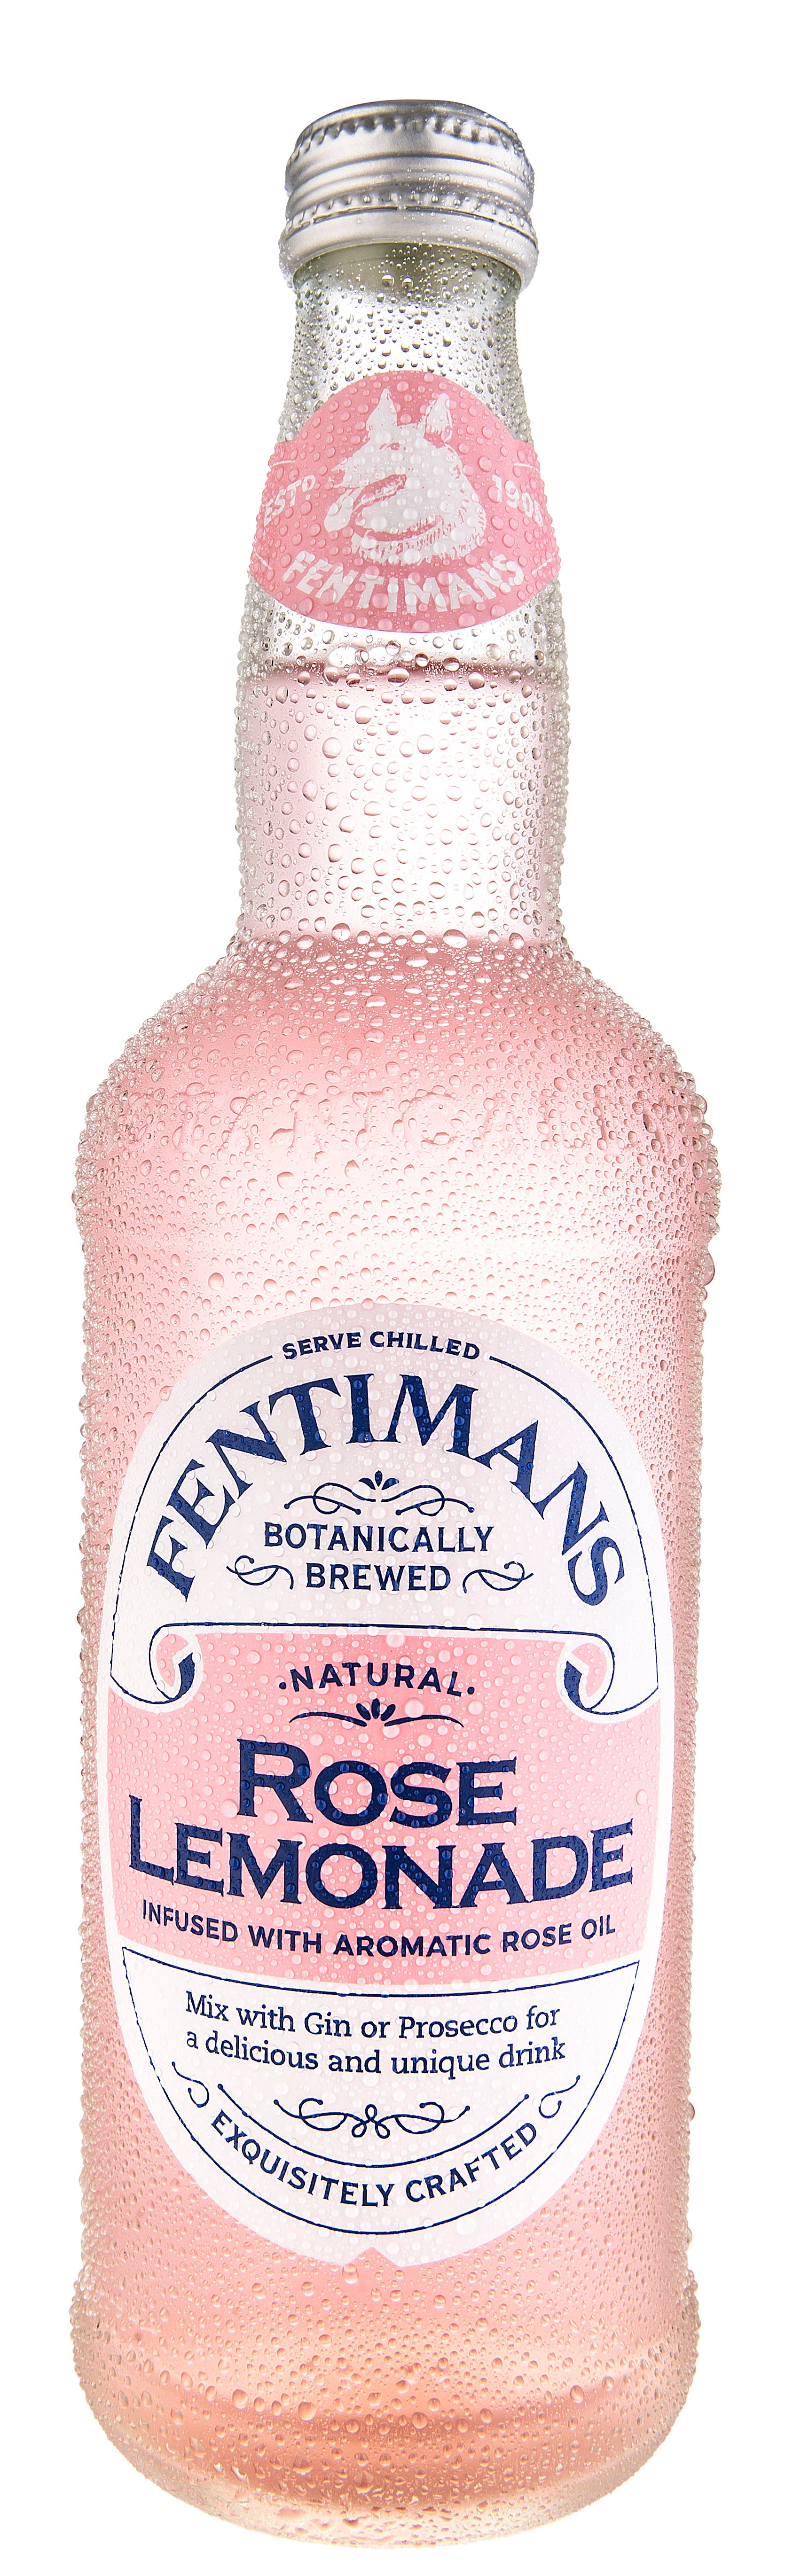 Rose Lemonade by Fentimans, 500ml